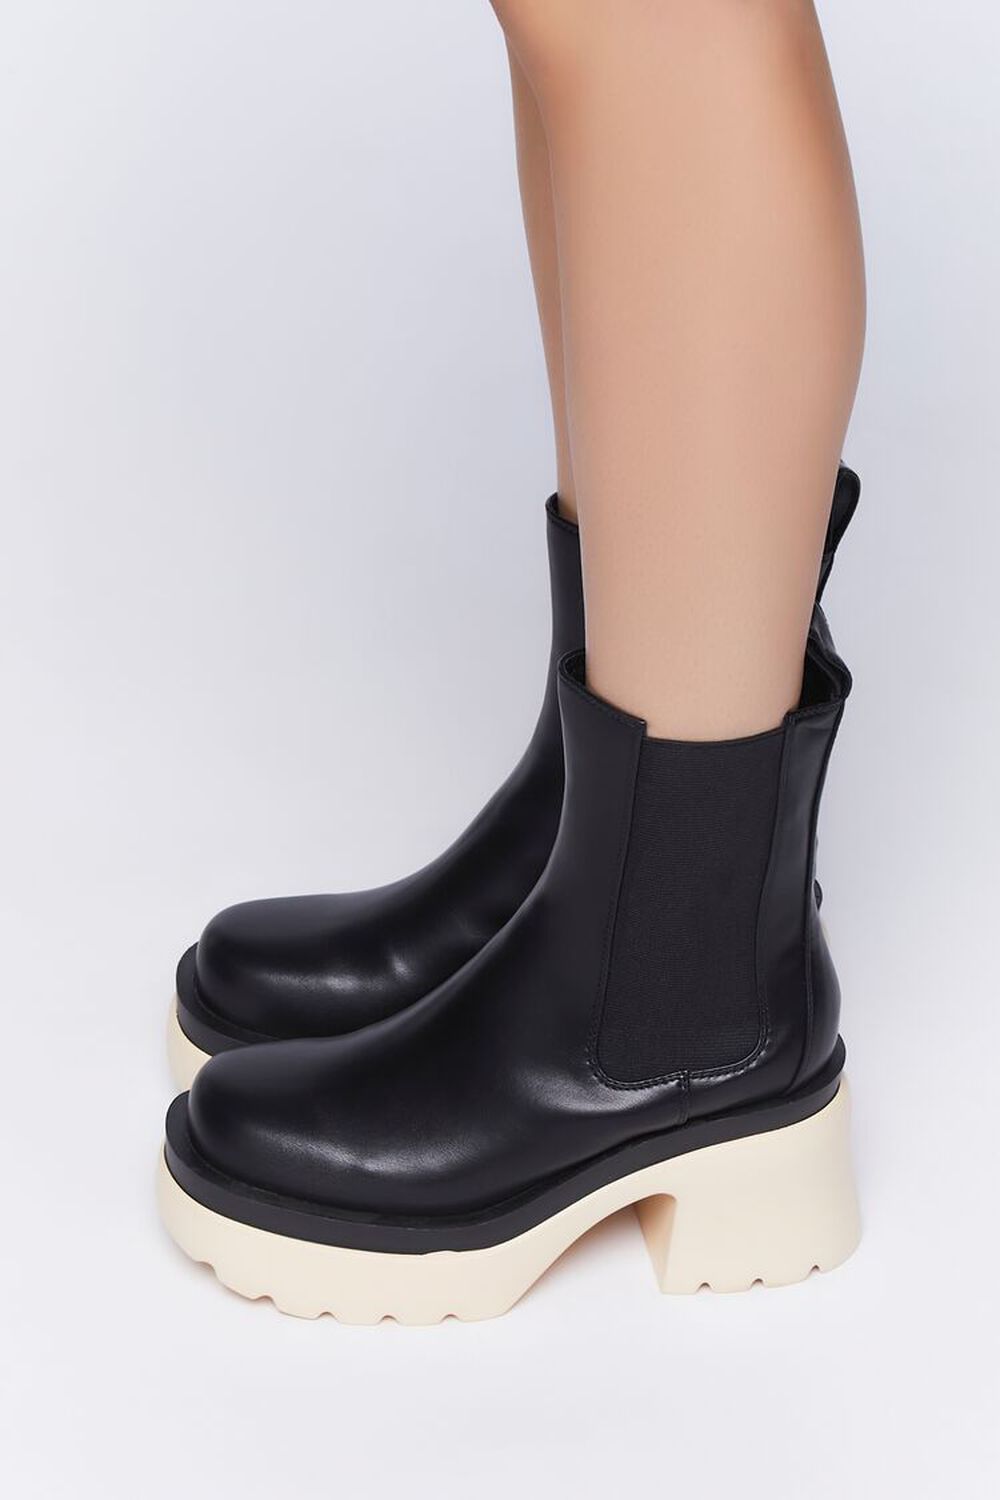 BLACK/CREAM Lug-Sole Chelsea Boots, image 2